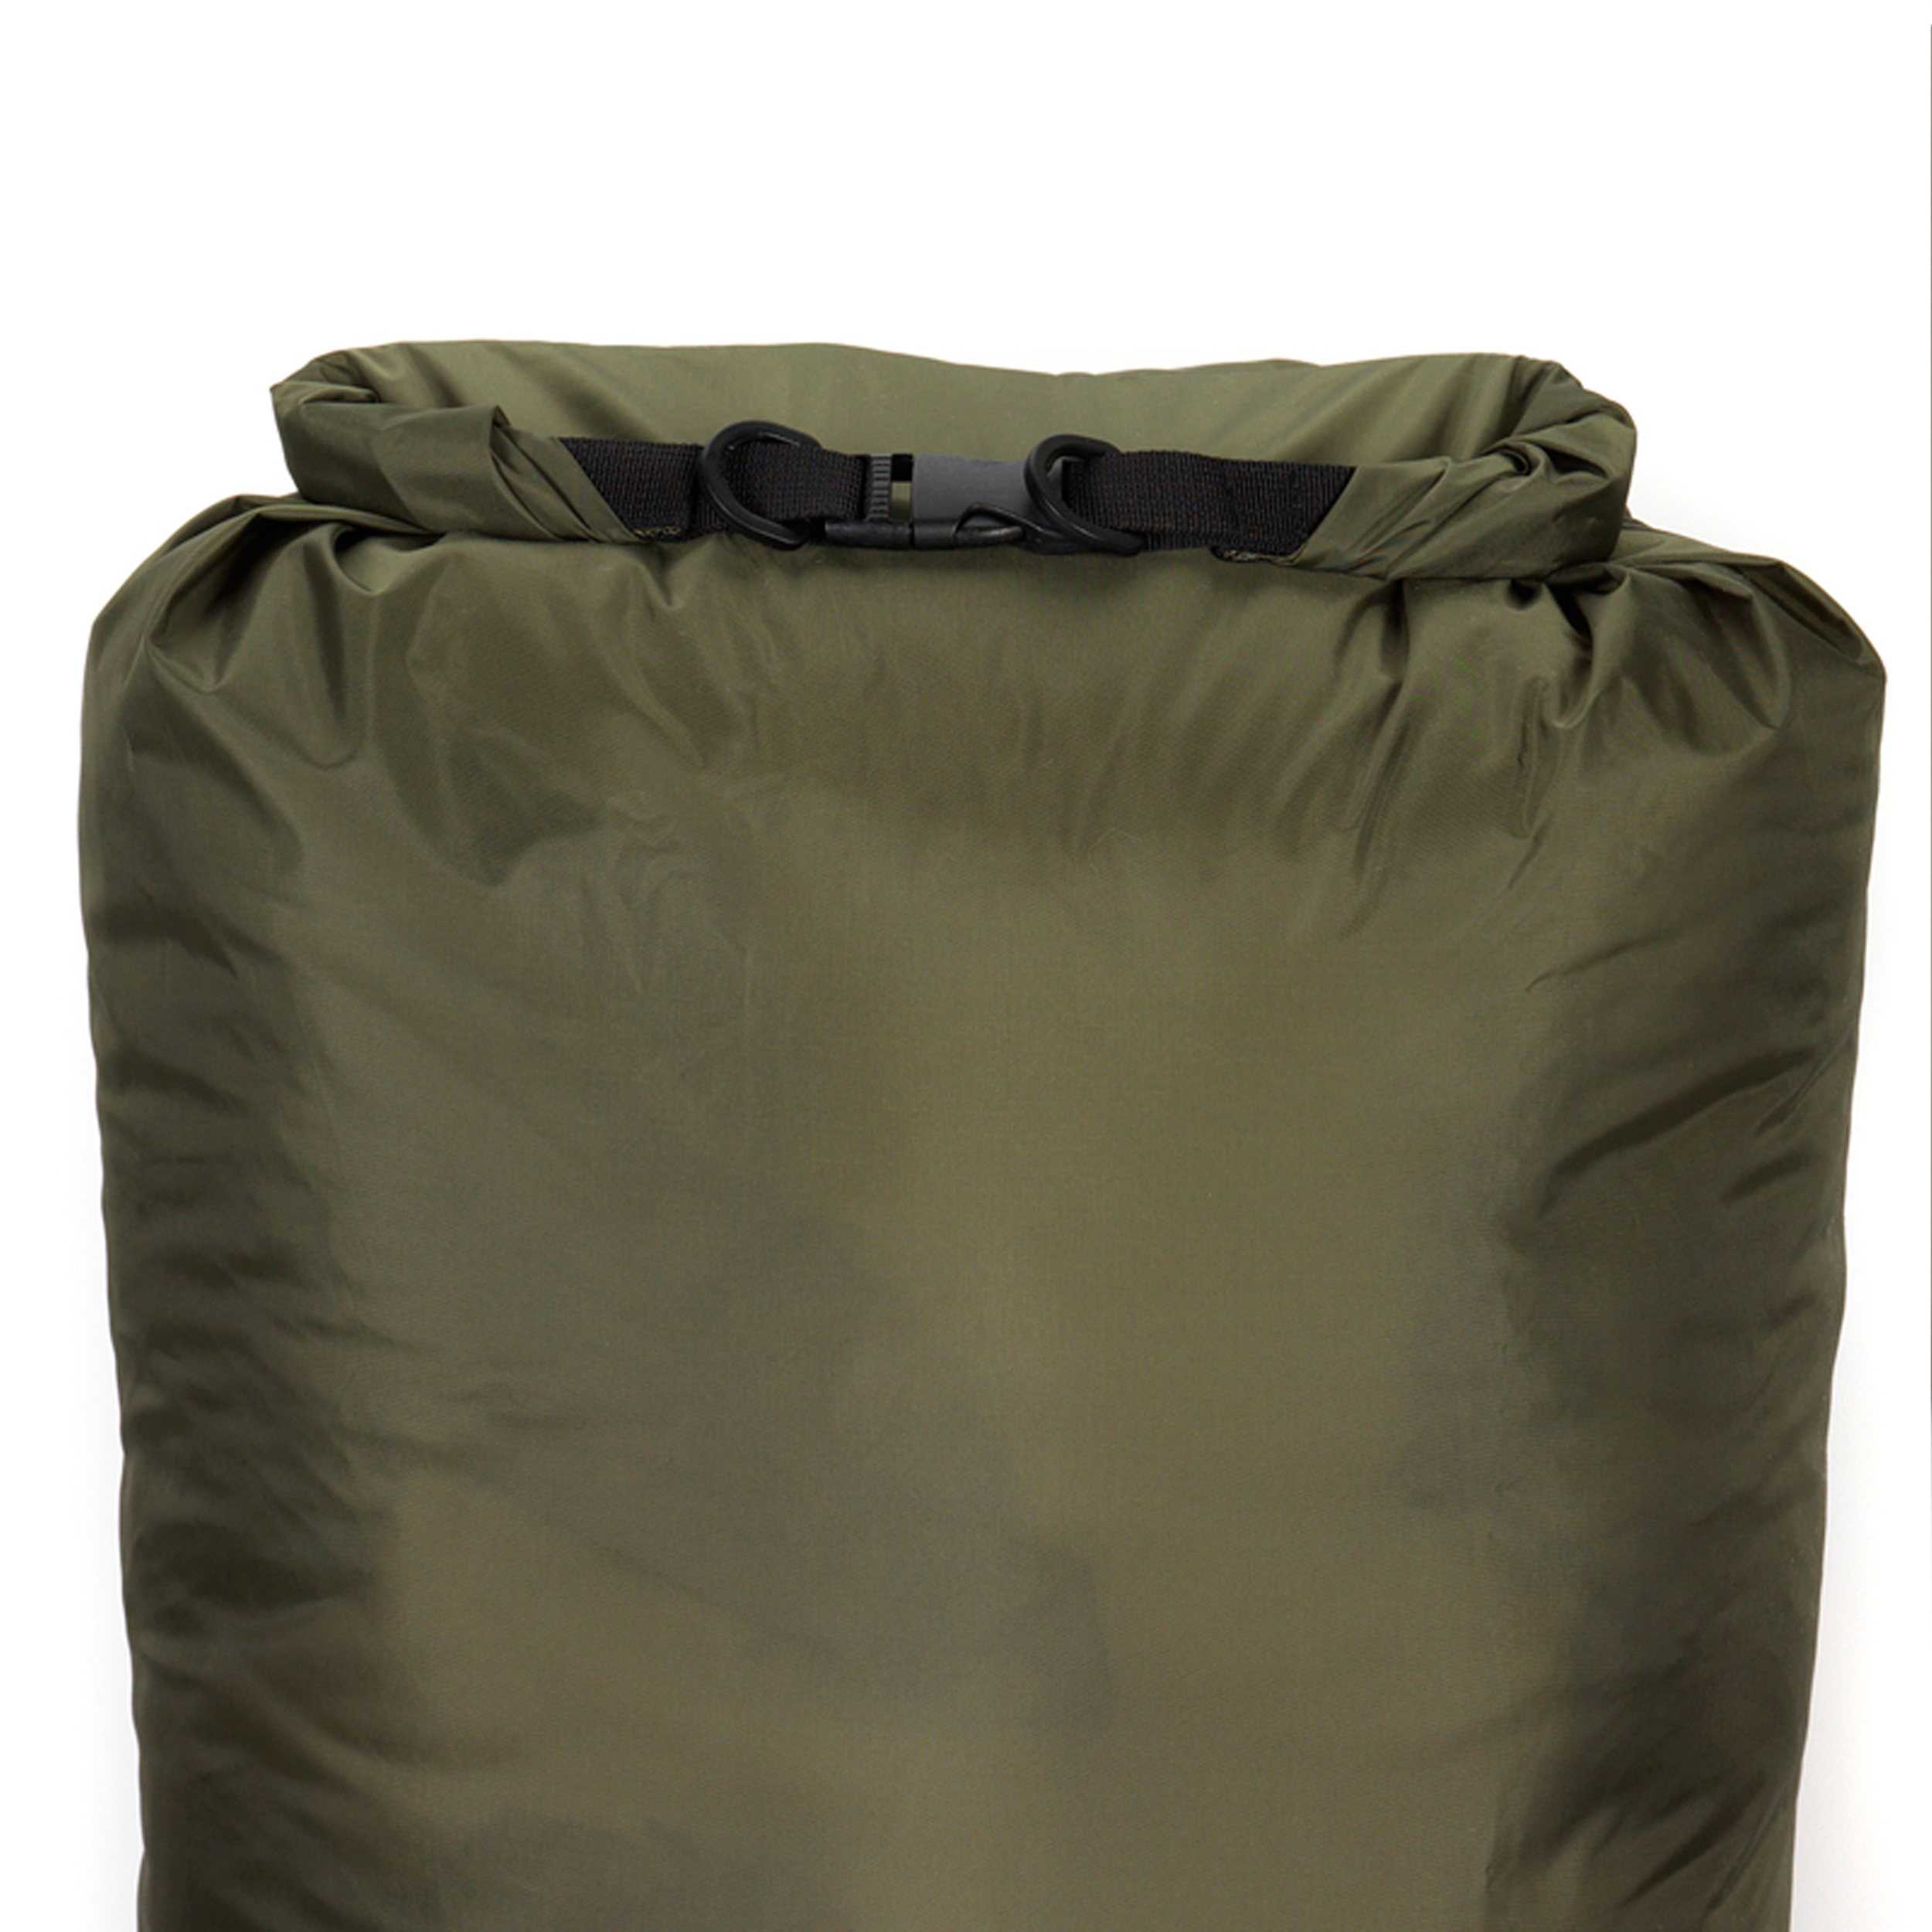 Proforce Equipment Sleeping Bag Compression Sacks - image 4 of 6